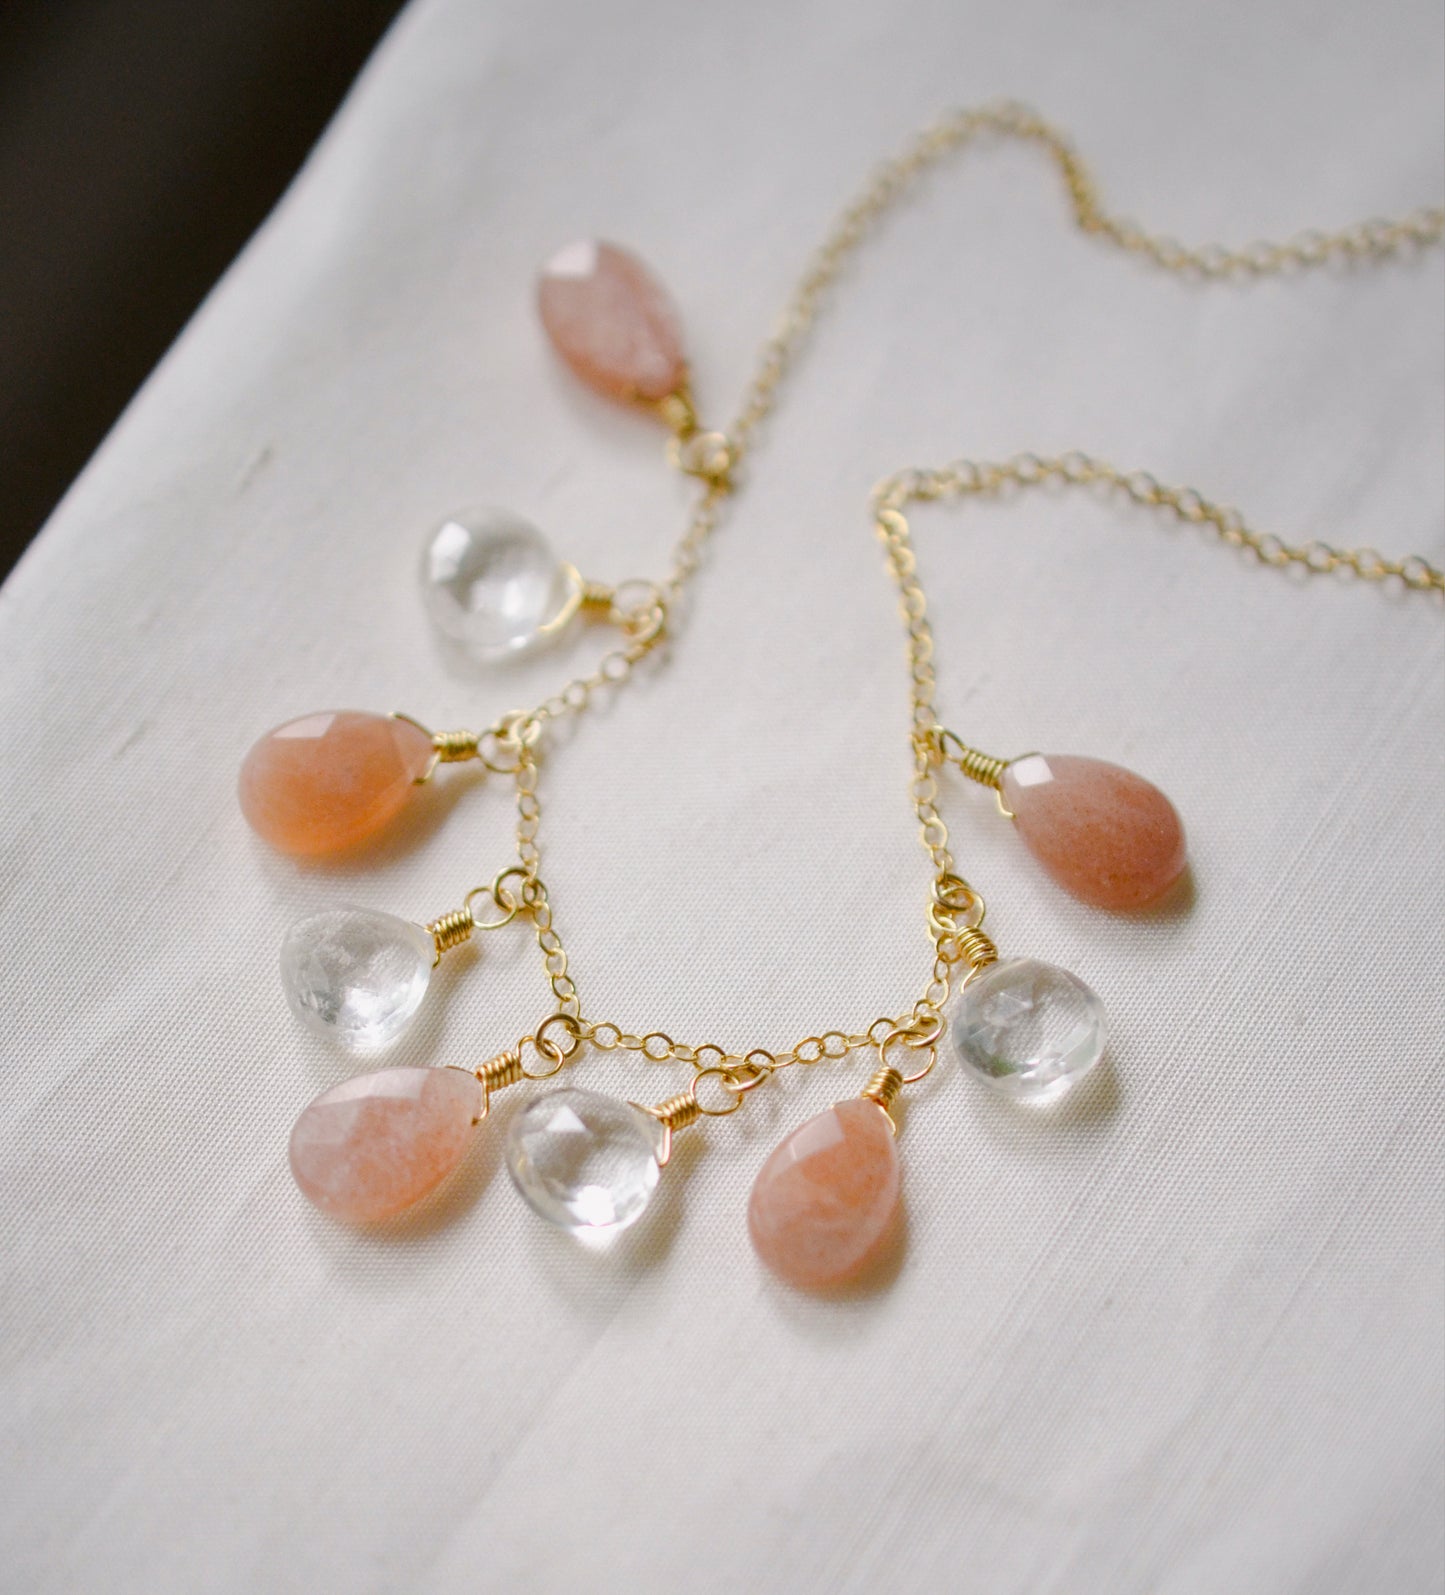 Orange, peach Sunstone and clear Crystal Quartz teardrops dangle off a 14k gold filled chain. 